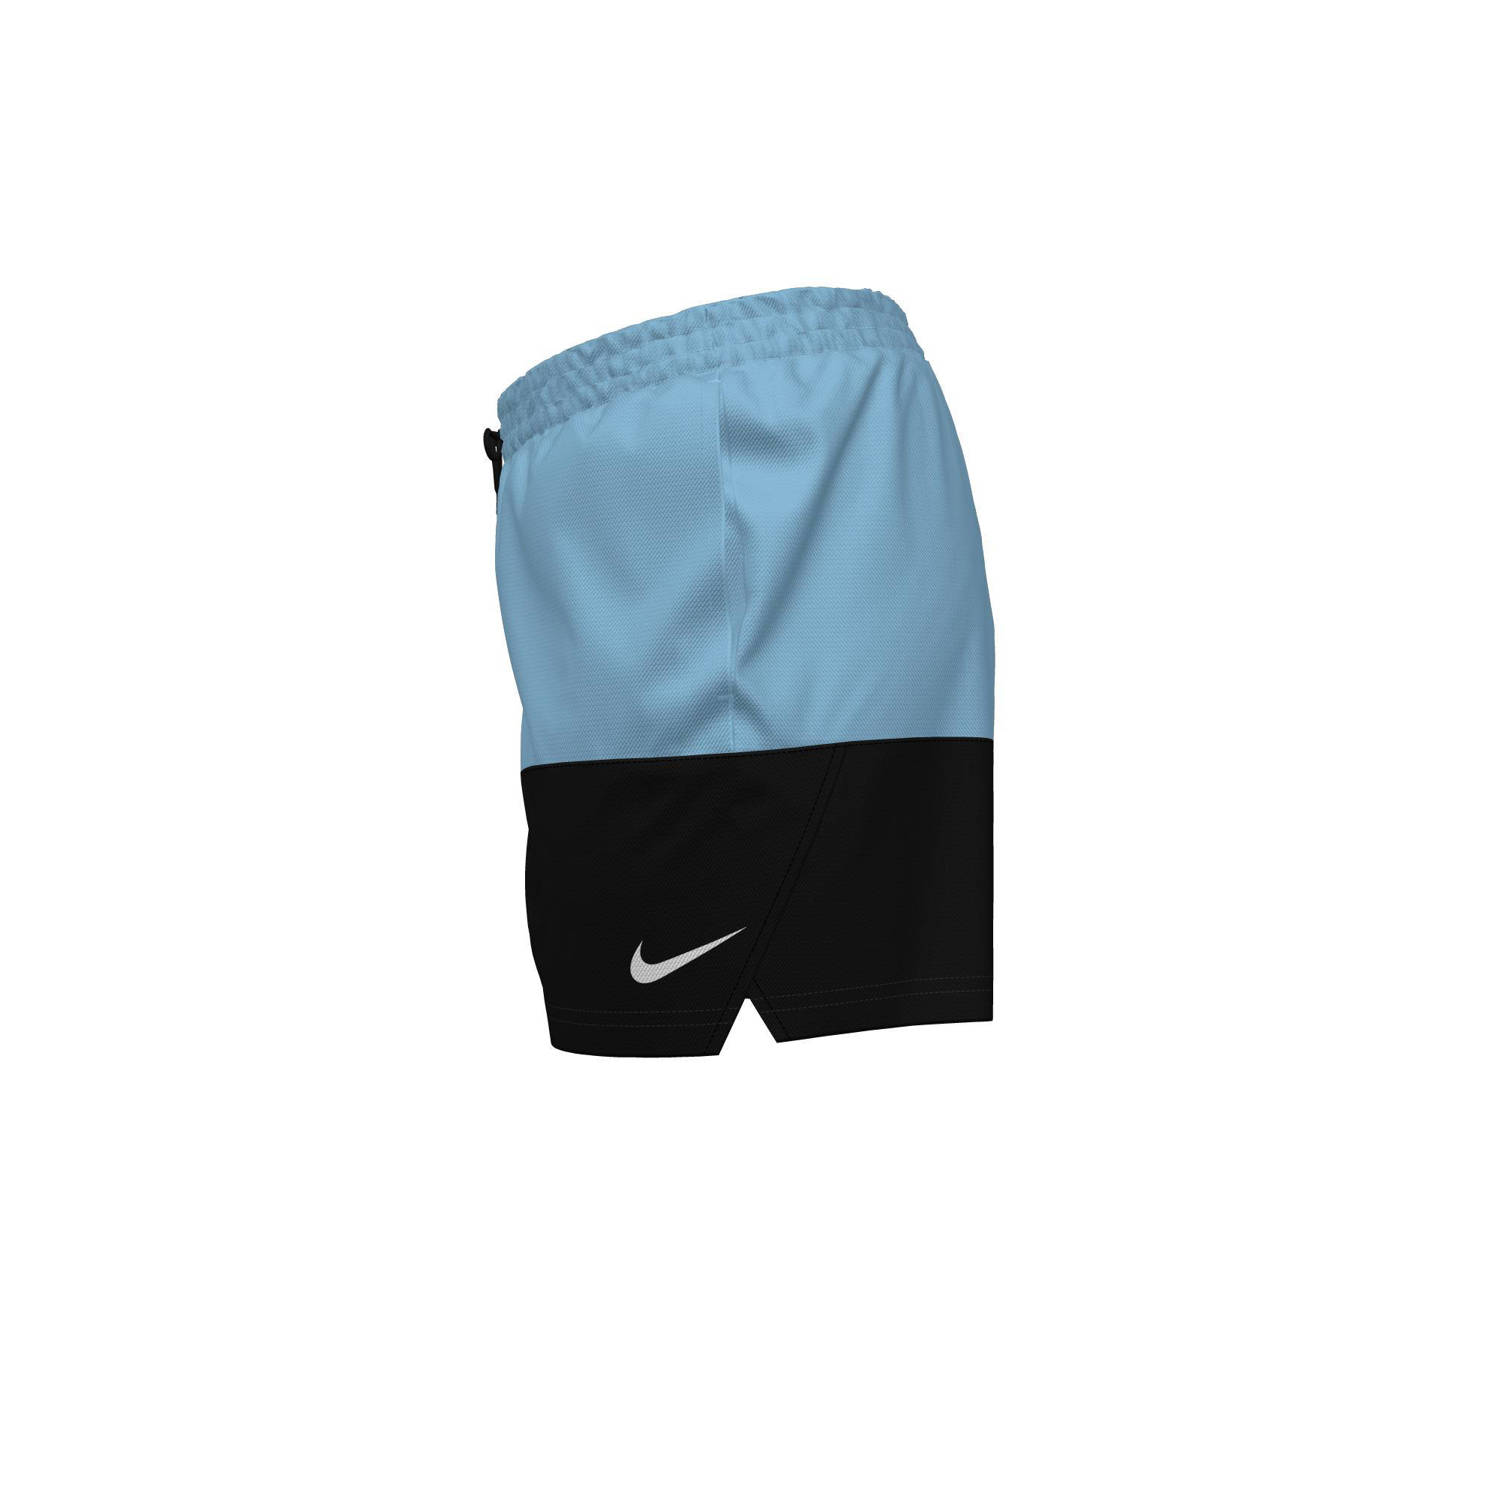 Nike zwemshort Split blauw donkerblauw